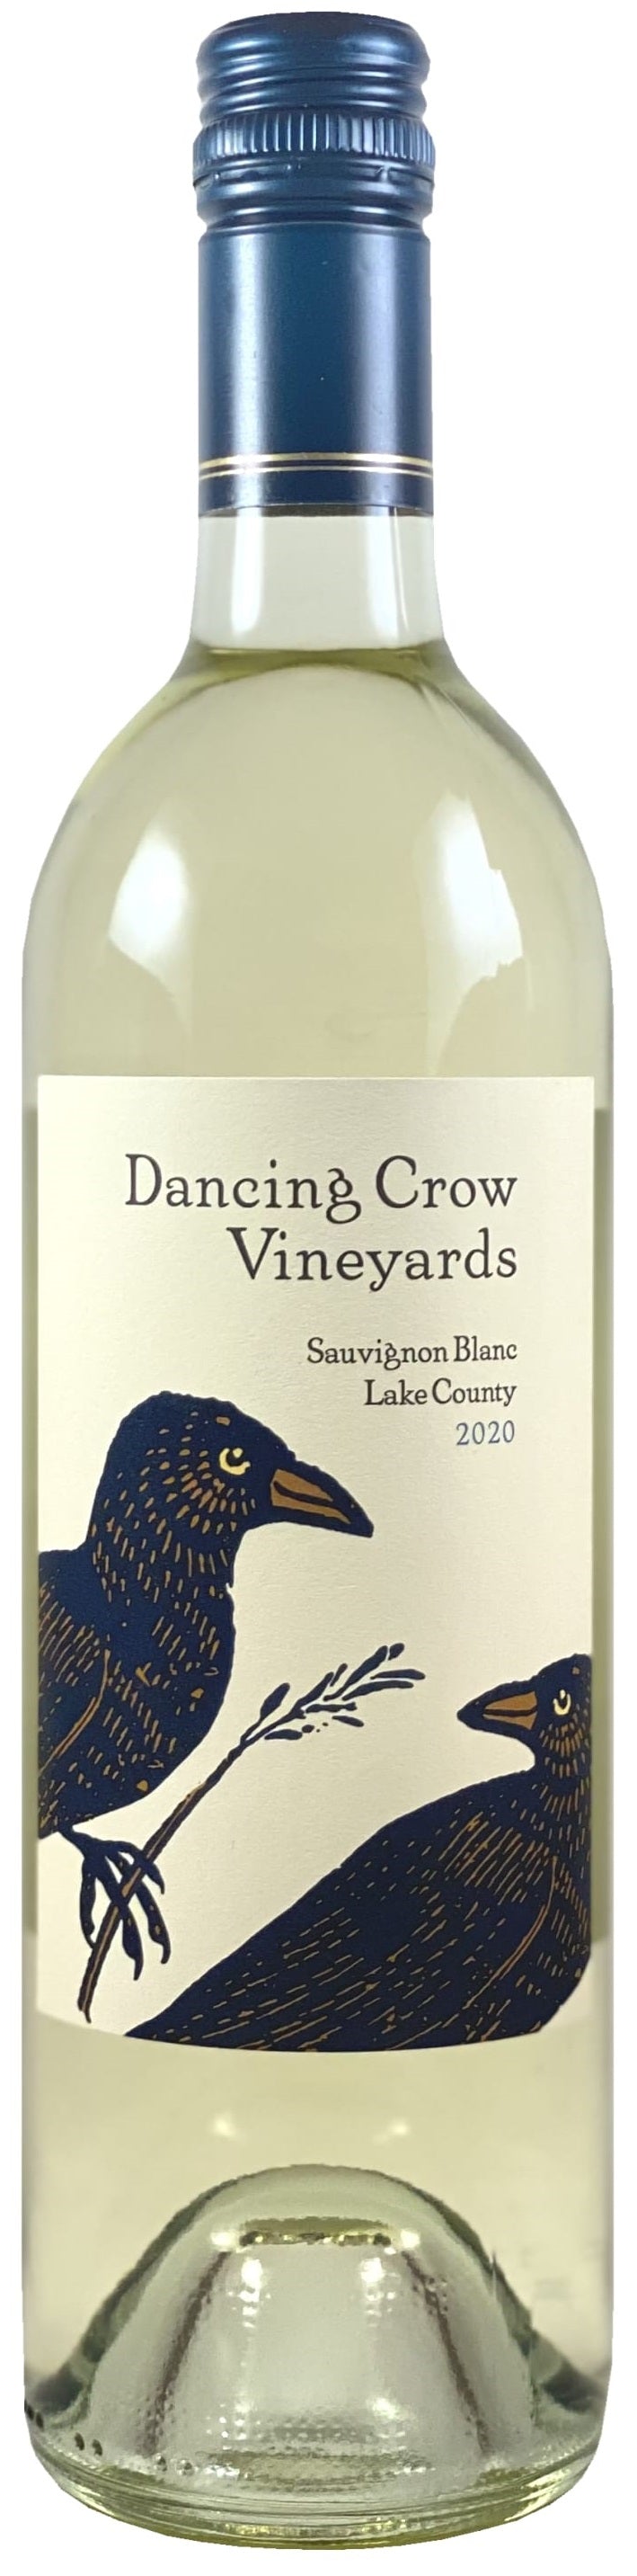 Dancing Crow Vineyards Sauvignon Blanc Lake County 2020